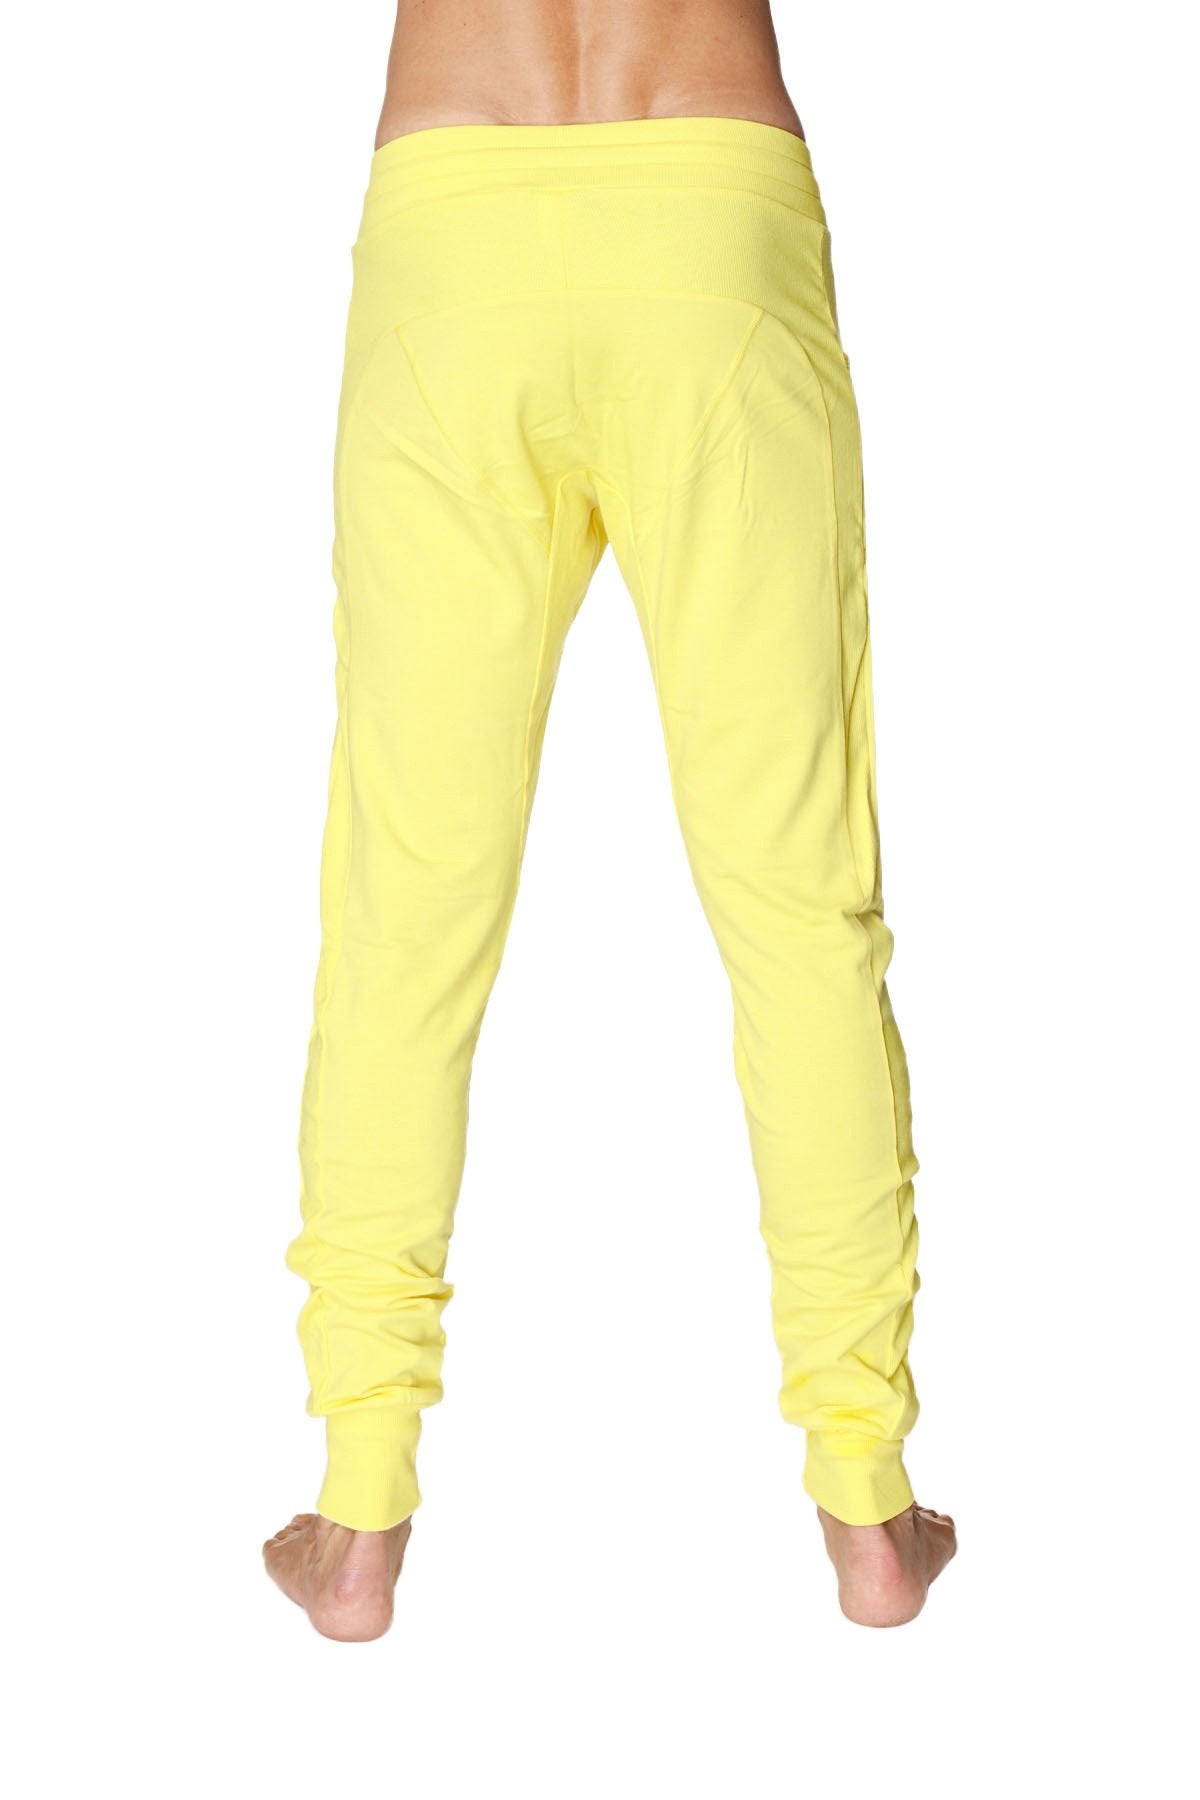 Long Cuffed Jogger Yoga Pants (Tropic Yellow) - 4-rth